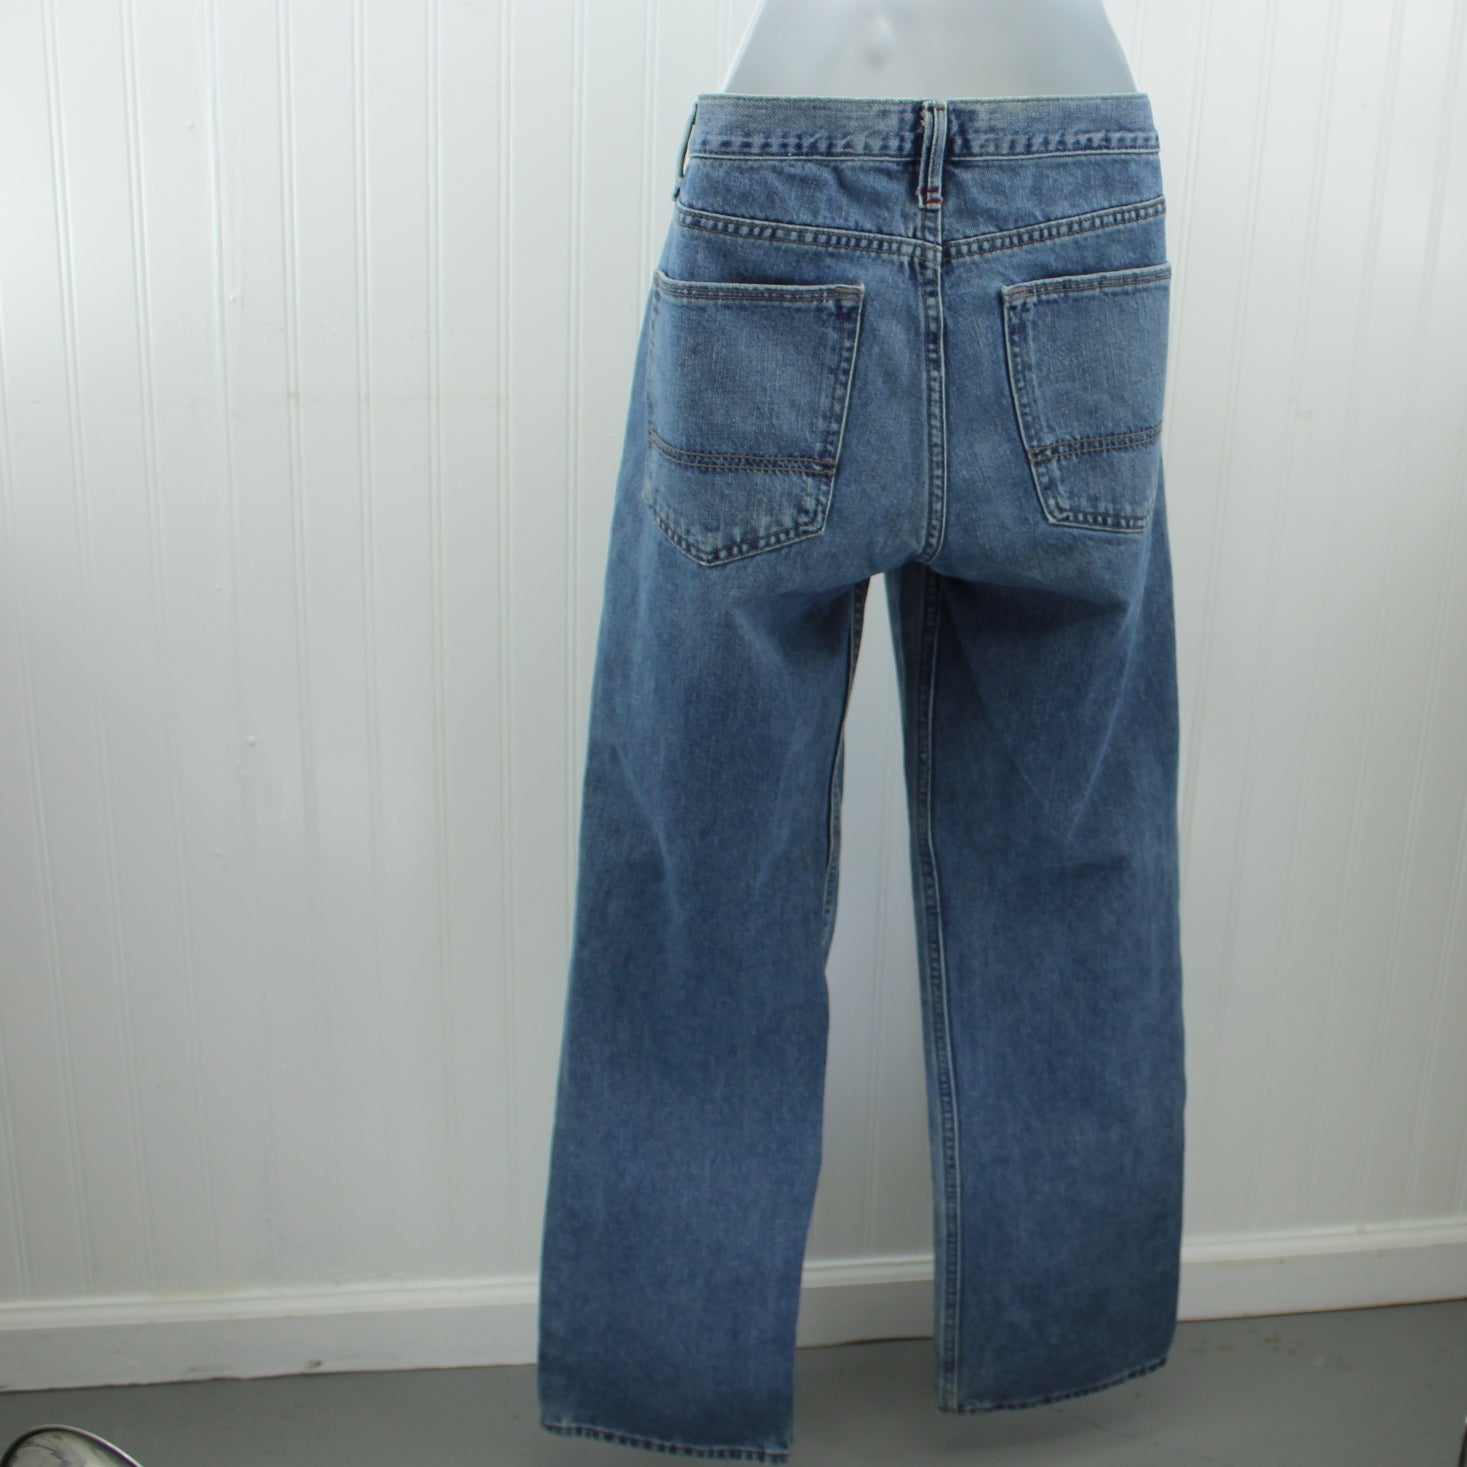 Arizona 100% Cotton Jeans Blue Straight Cut 32X32 back pix jeans